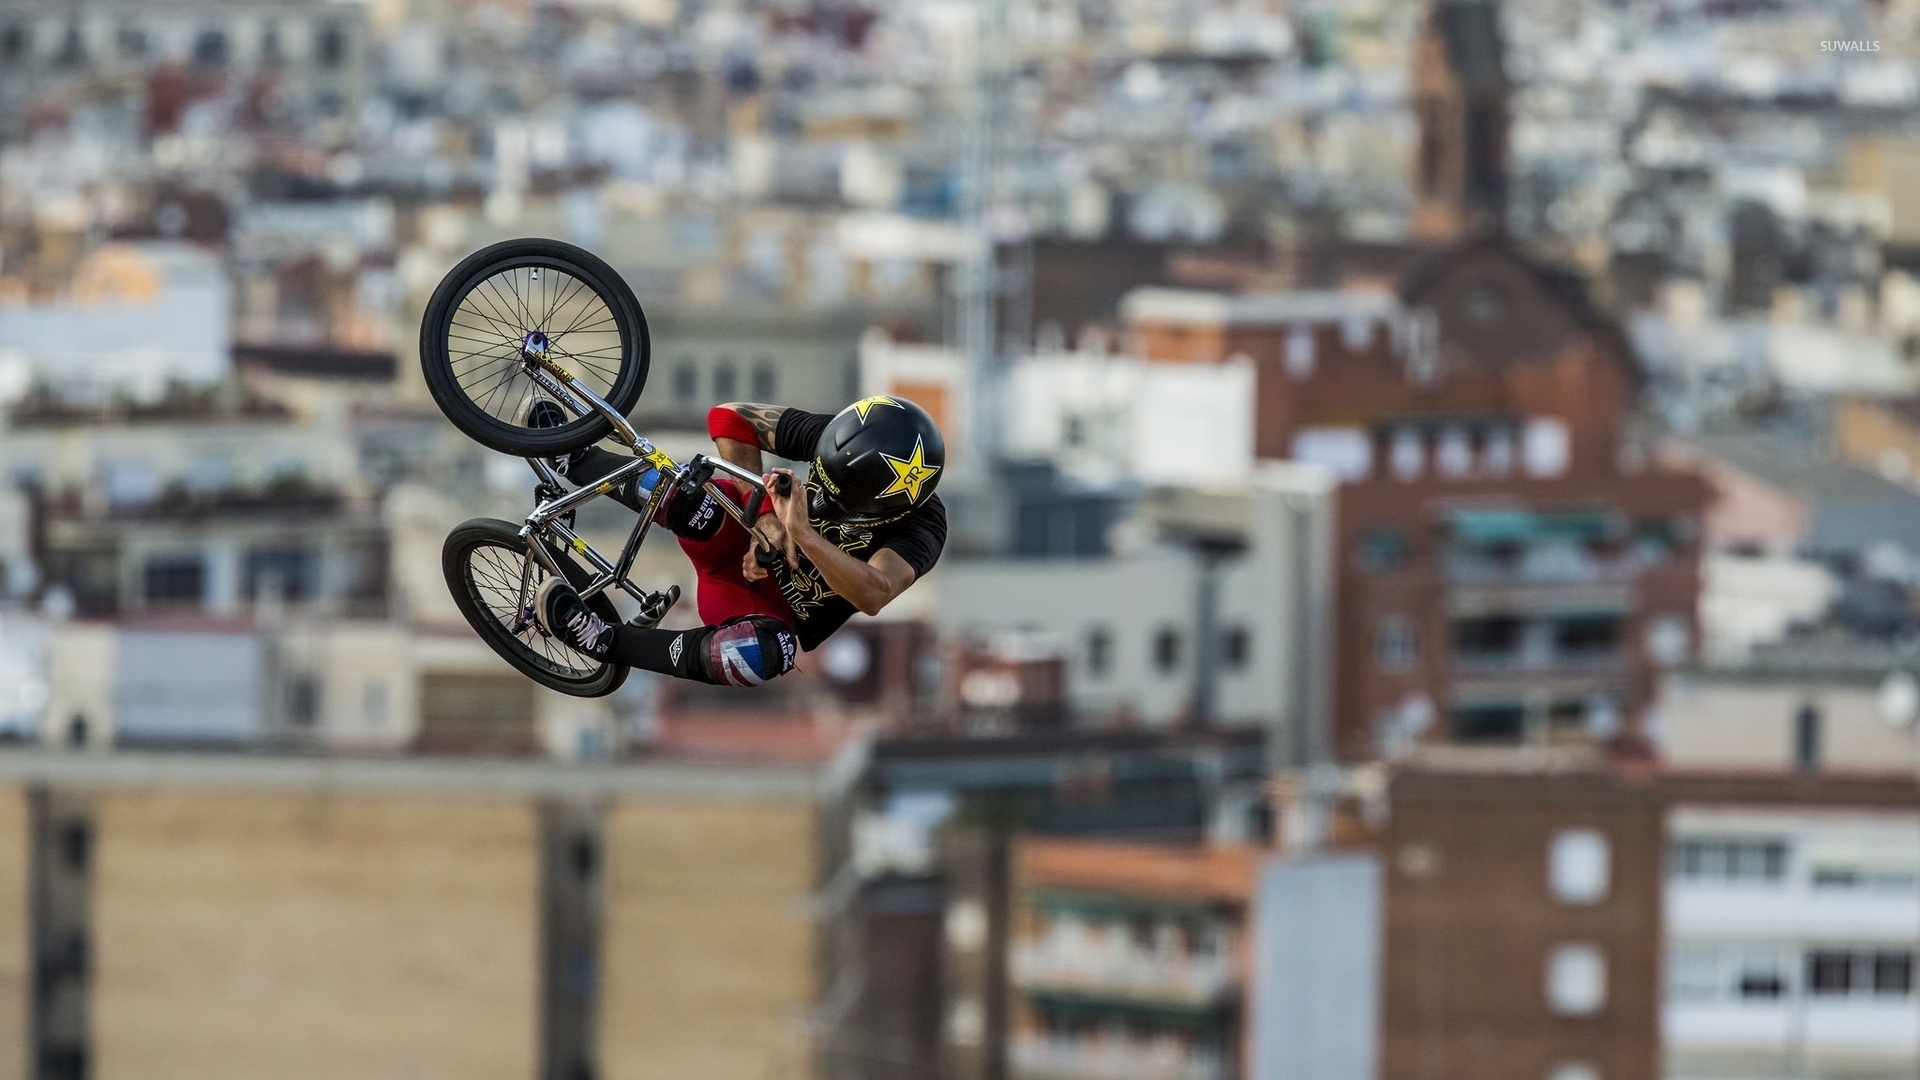 Jumping: Dirt jumping,  Street mountain bike, Stunt riding, Extreme sport. 1920x1080 Full HD Wallpaper.